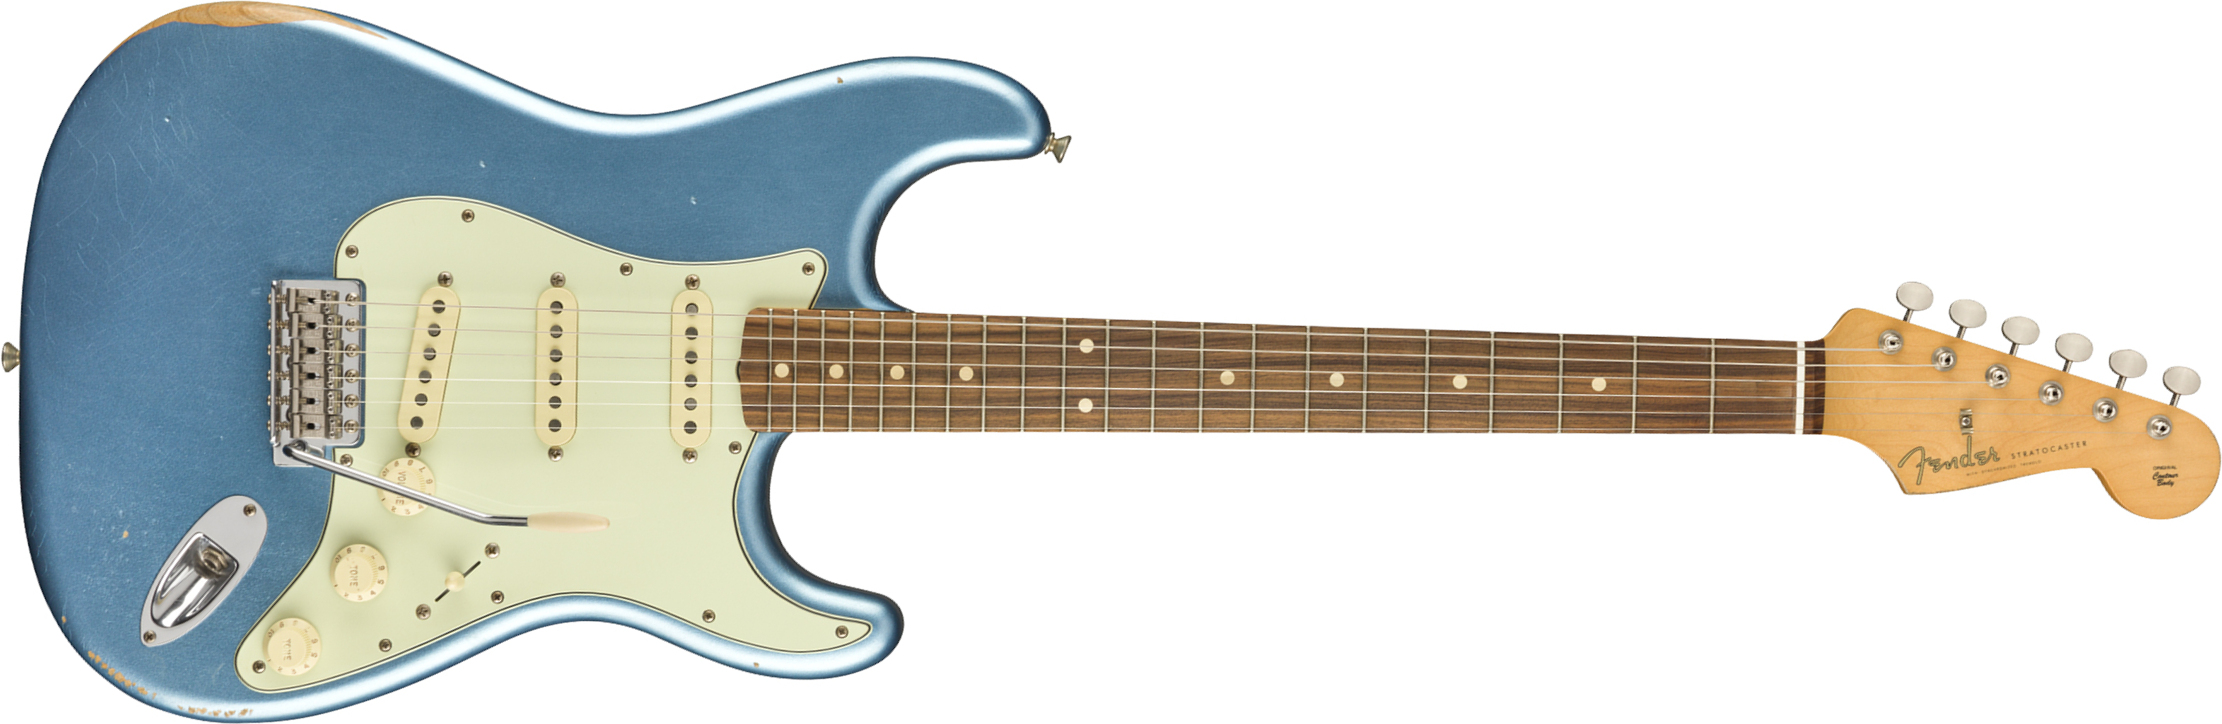 Fender Strat 60s Road Worn Mex Pf - Lake Placid Blue - Guitarra eléctrica con forma de str. - Main picture